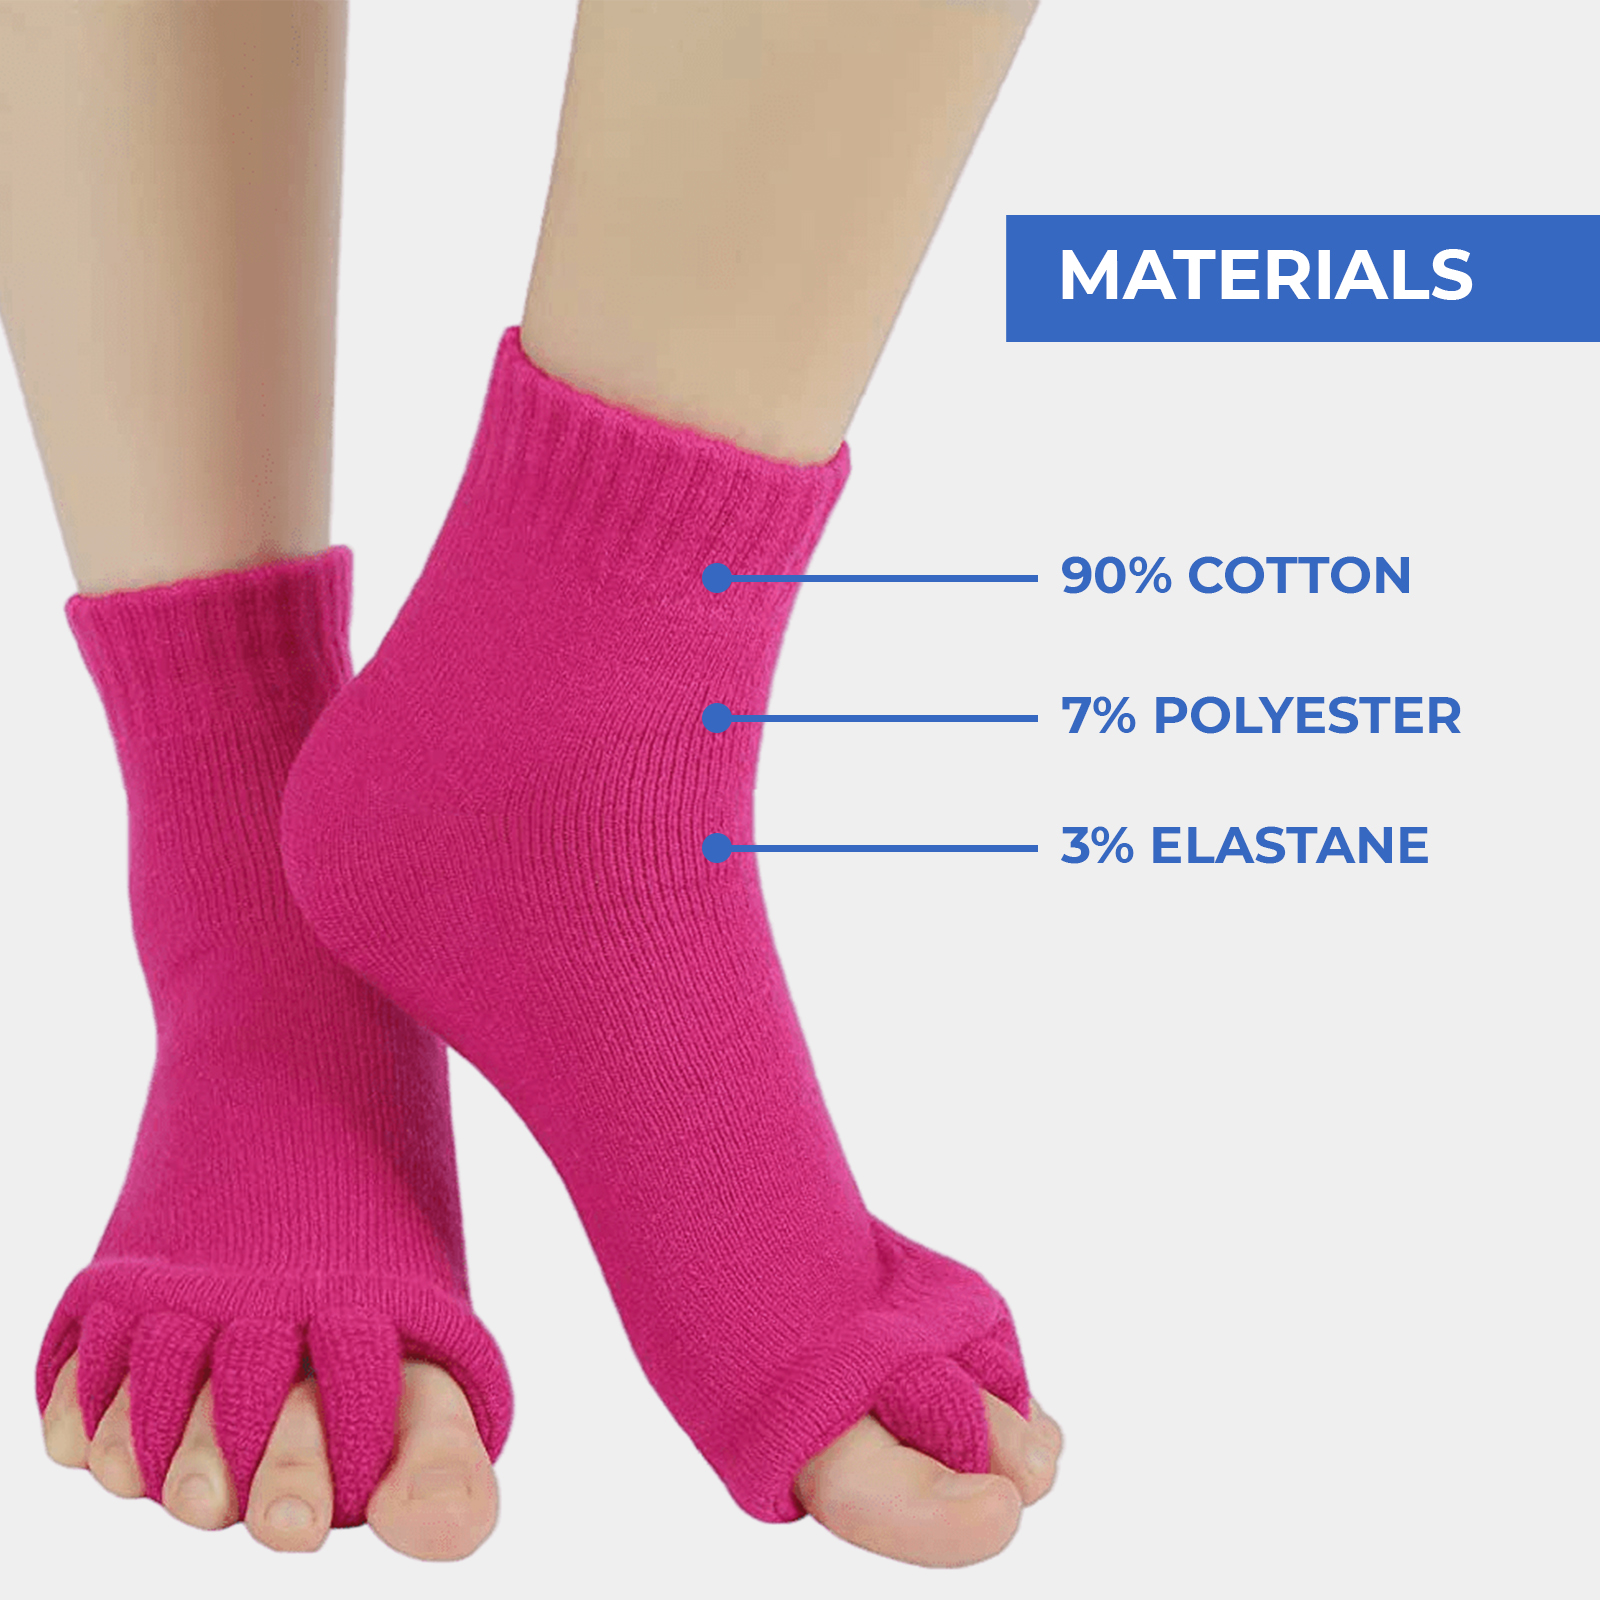  Happy Feet Toe Separator Alignment Socks - Comfortable Toe Separator  Socks Massage Socks – Prevent Foot Cramp and hammertoes - Black : Beauty &  Personal Care